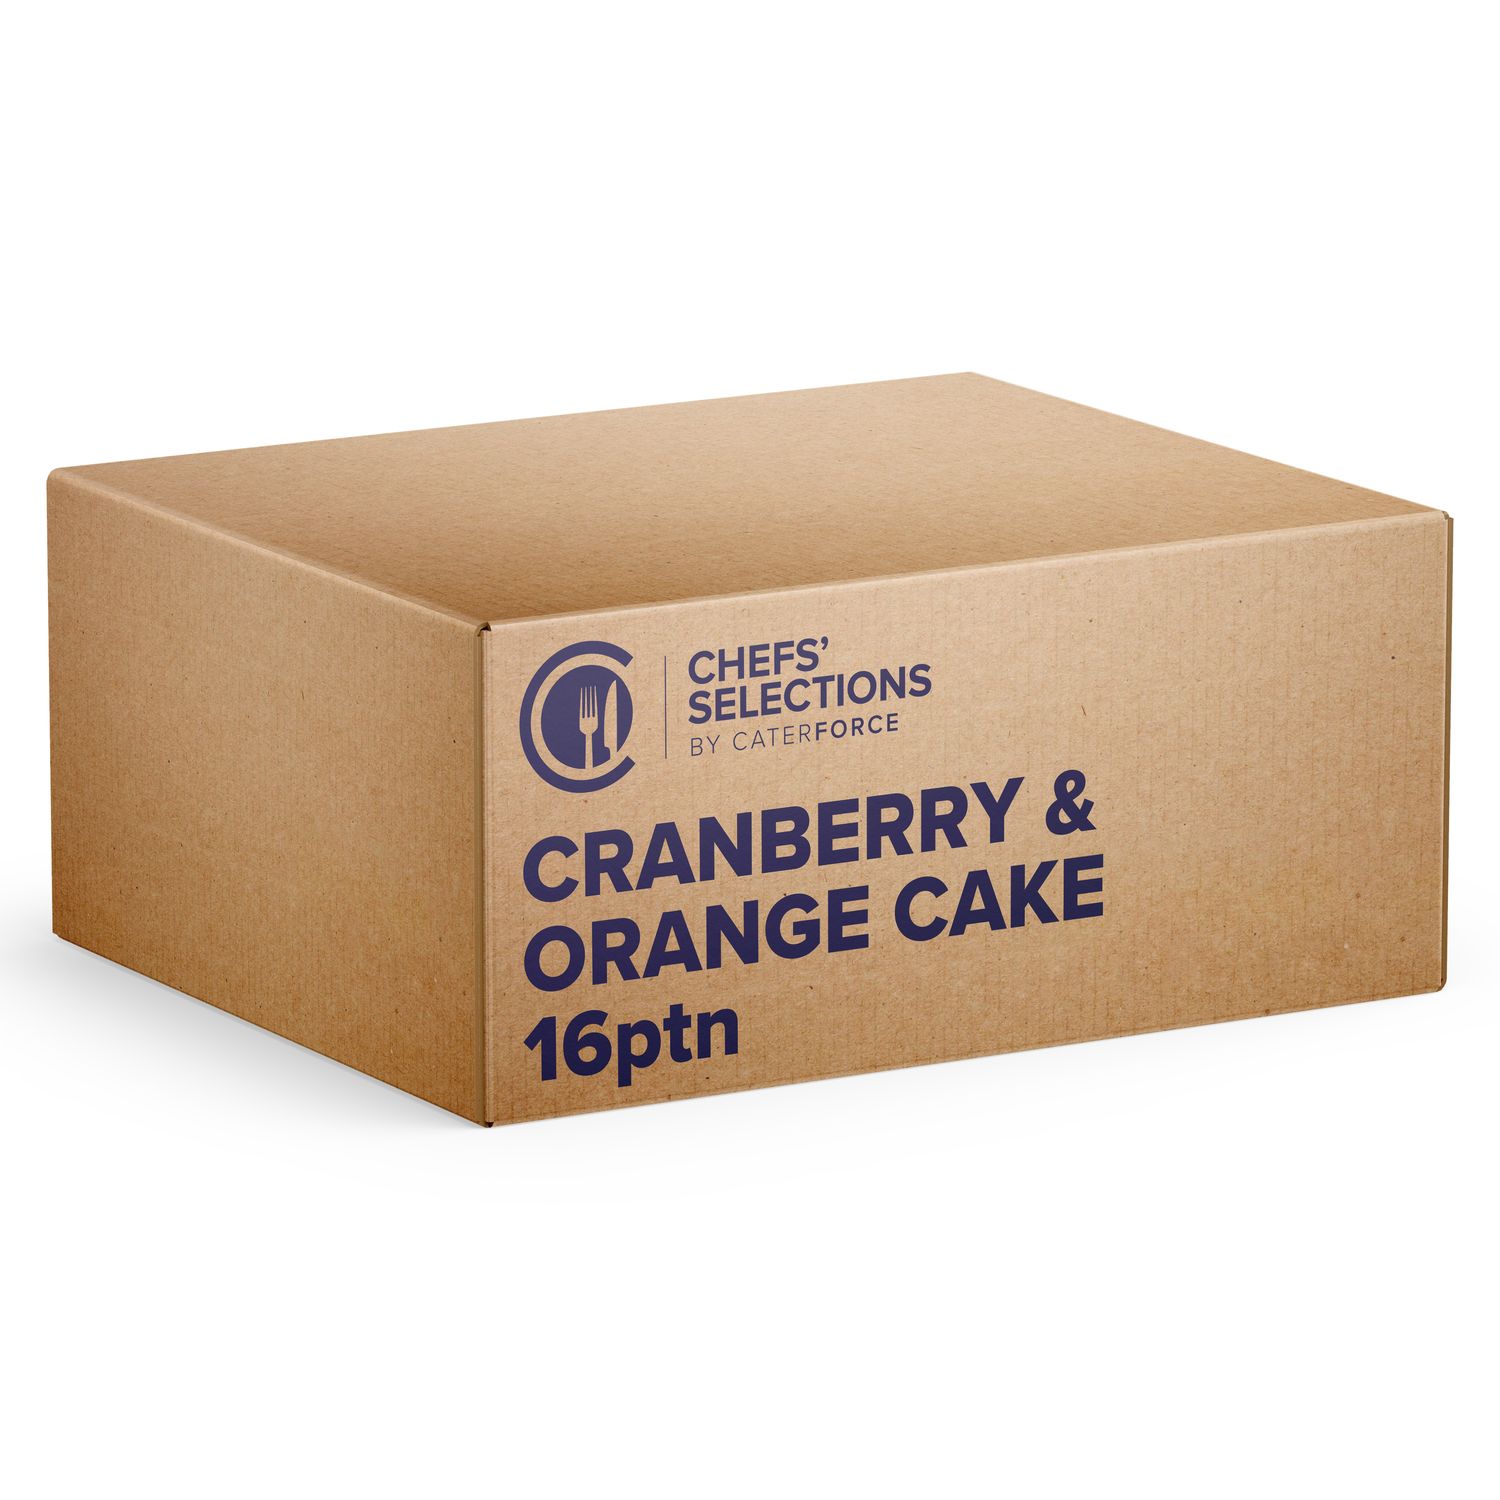 Chefs’ Selections Cranberry & Orange Cake (1 x 16p/ptn)